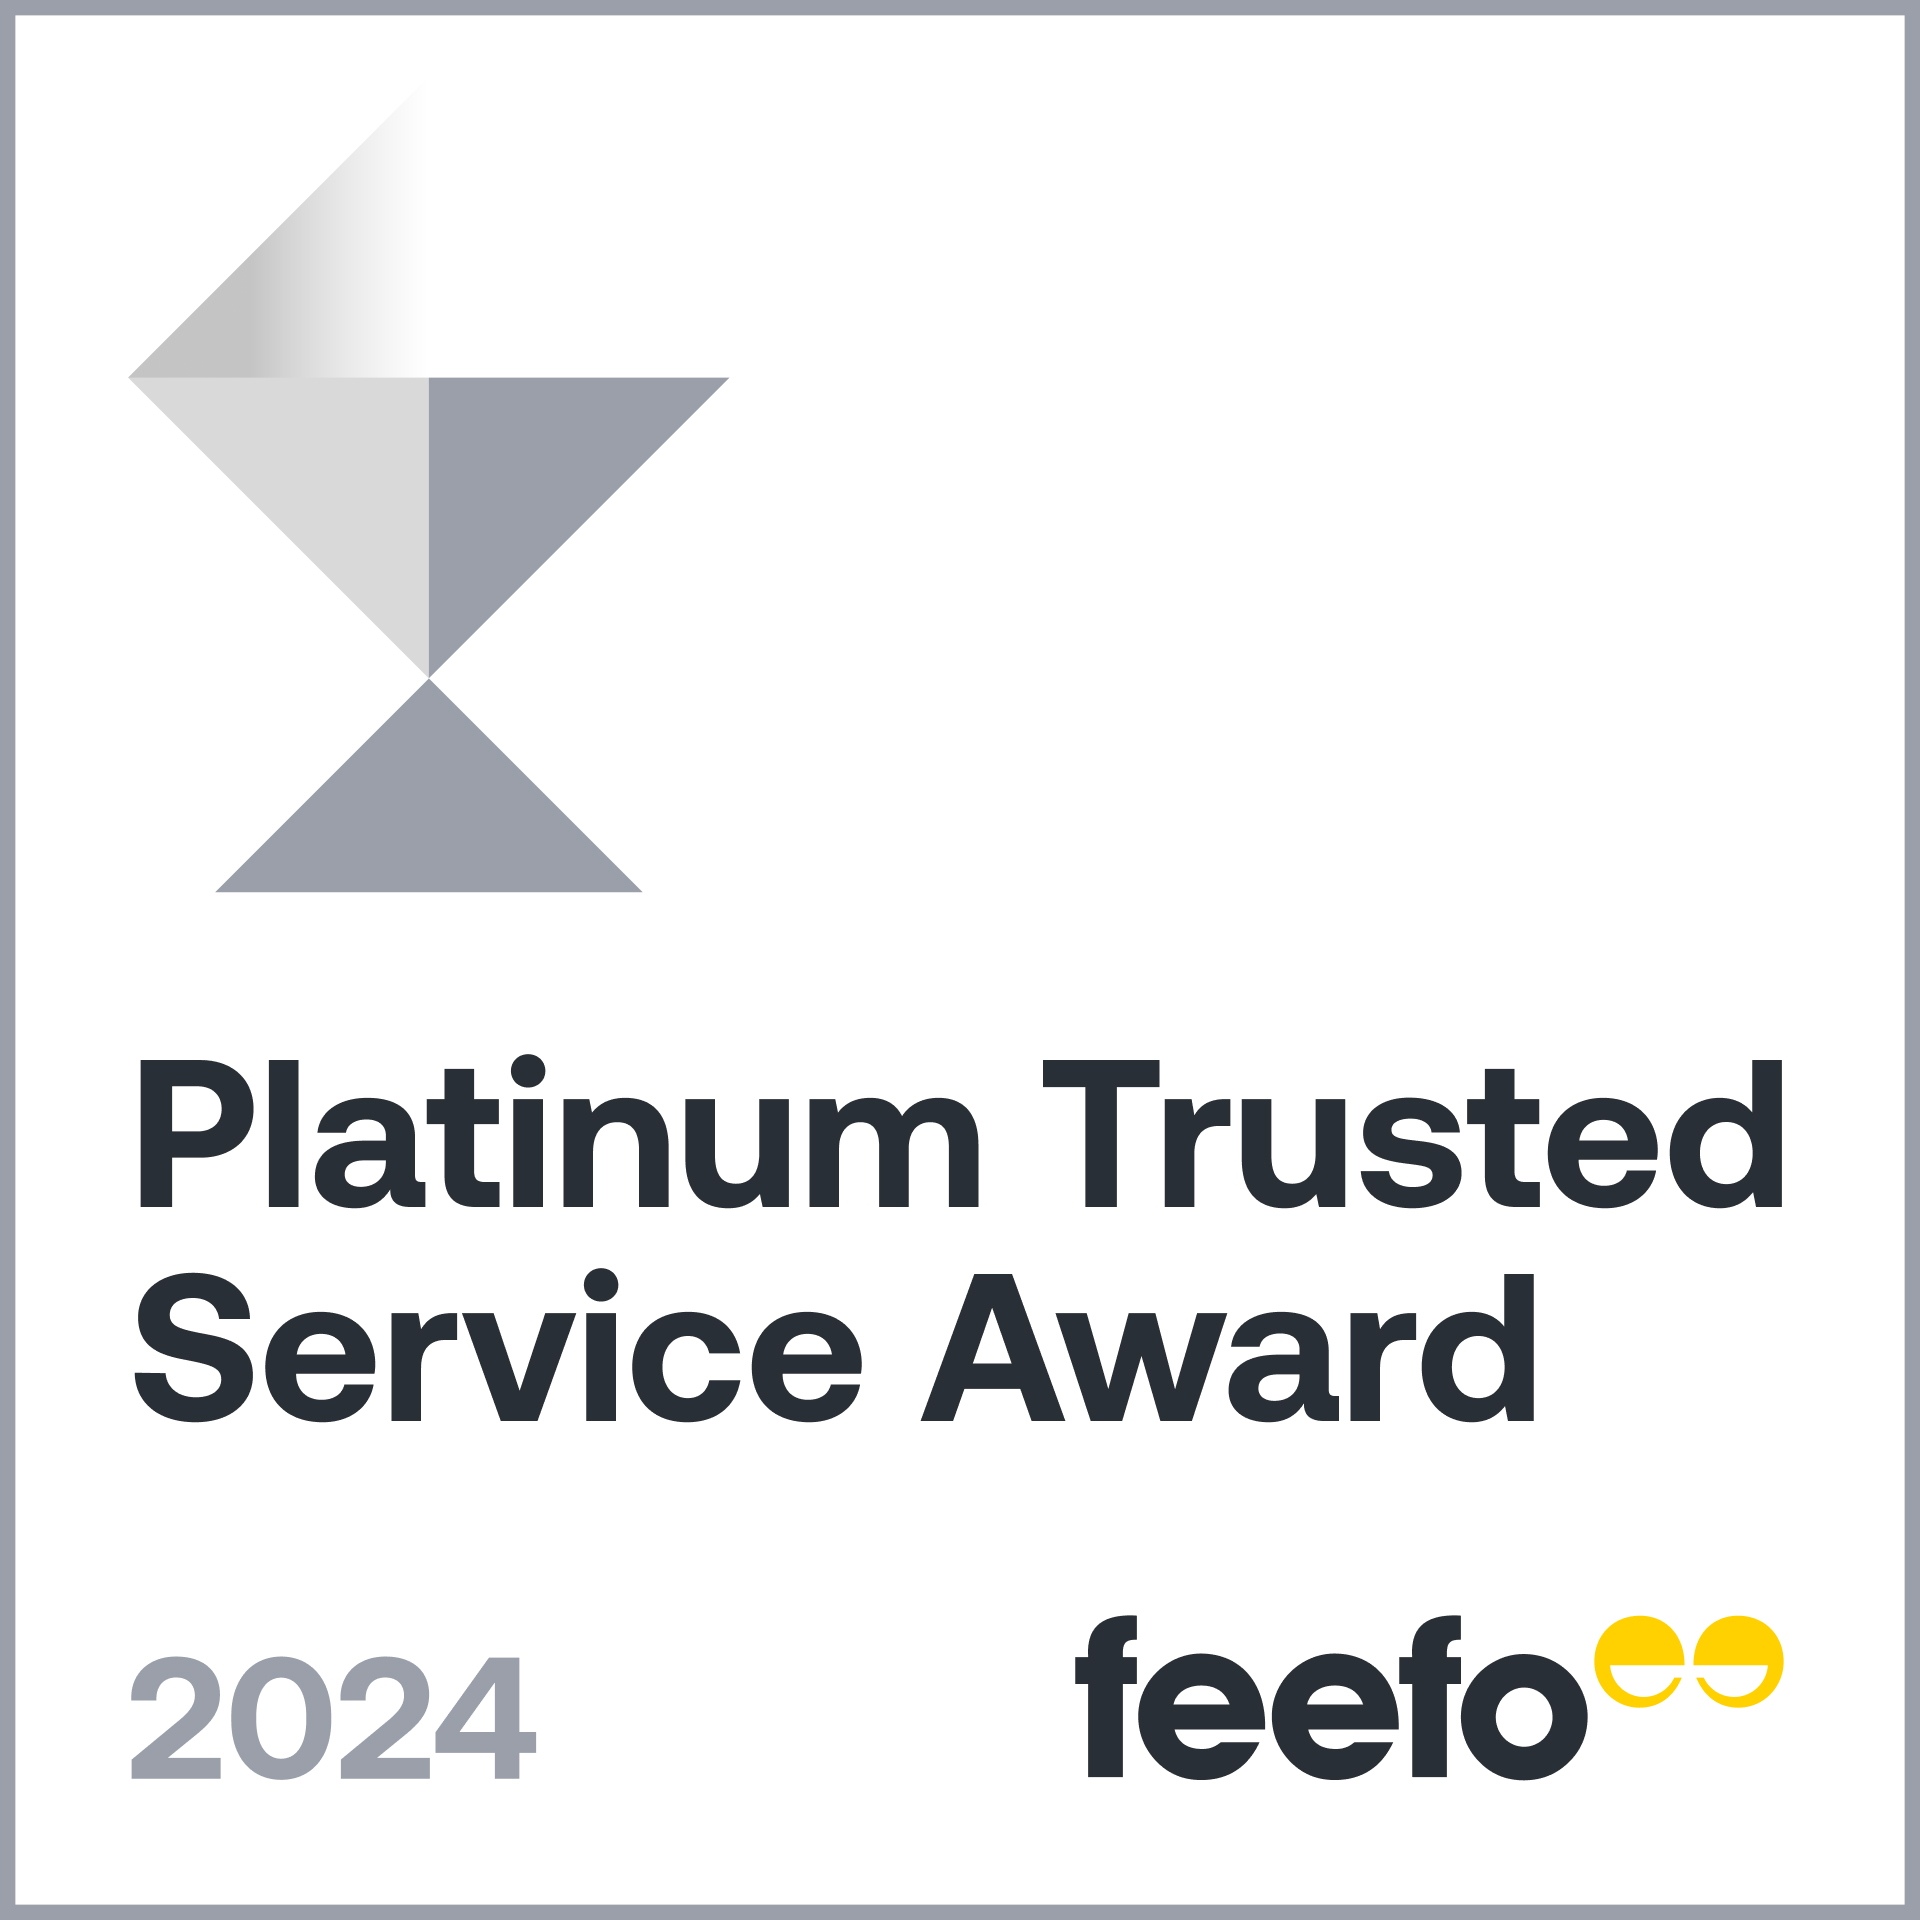 Platinum Trusted Service Award 2024 - Badge - 1x1.jpg